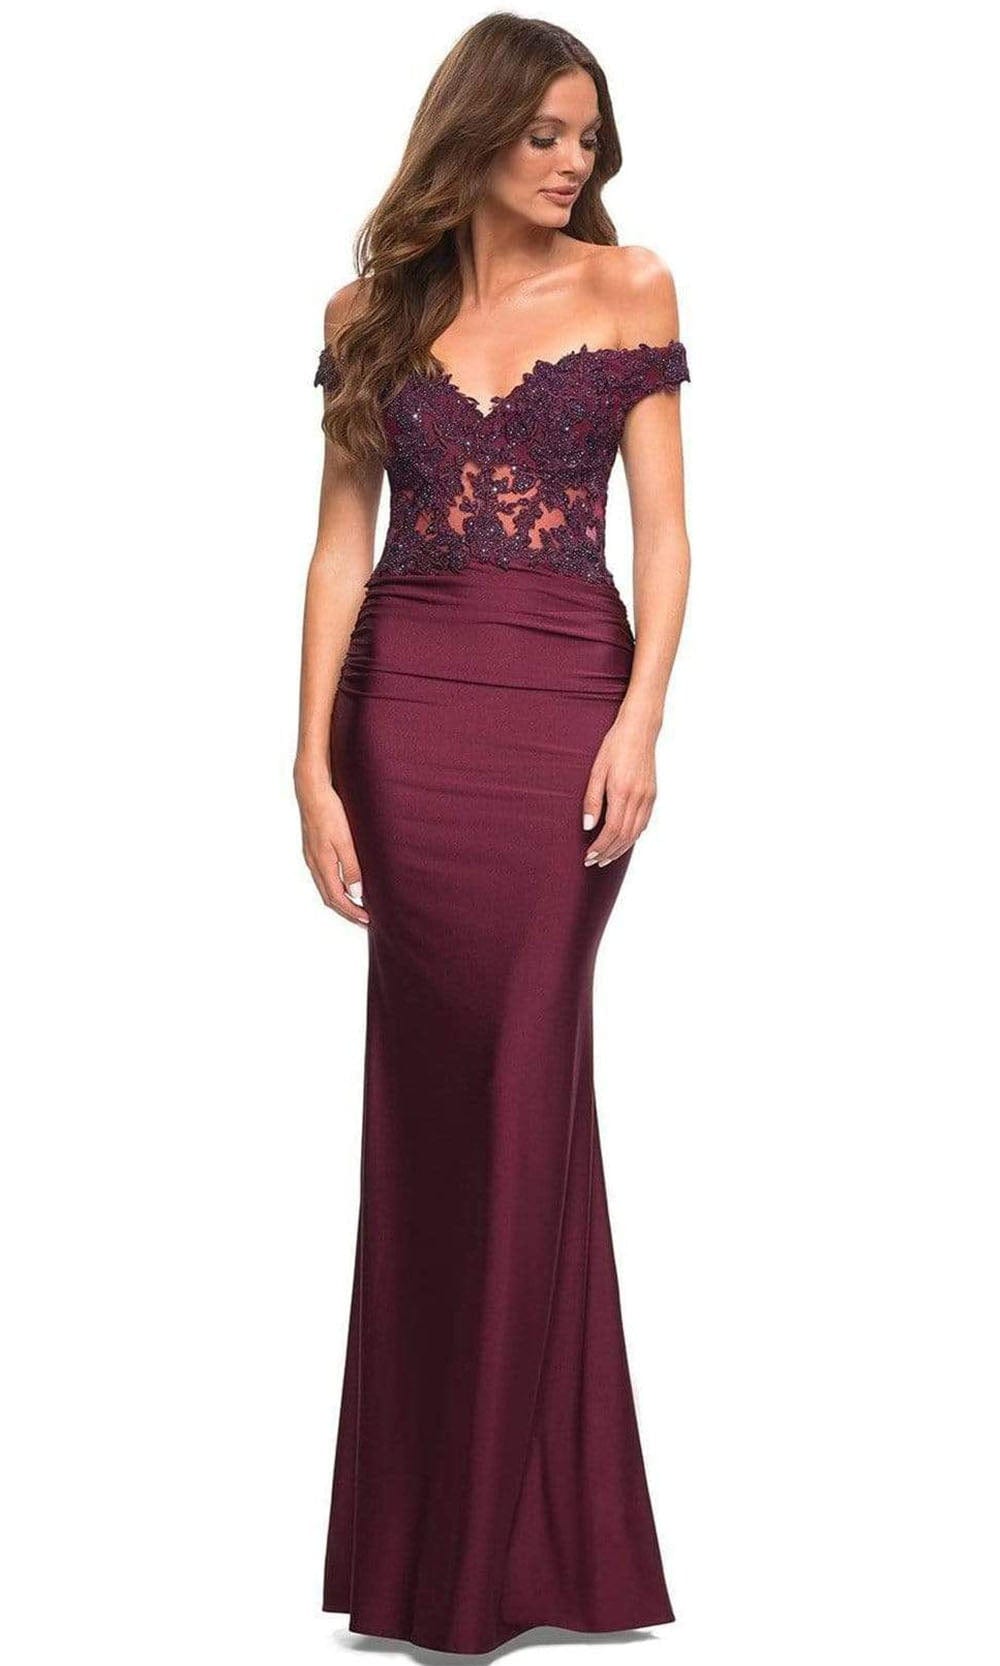 La Femme - 30741 Illusion Lace Top Long Dress Prom Dresses 00 / Dark Berry